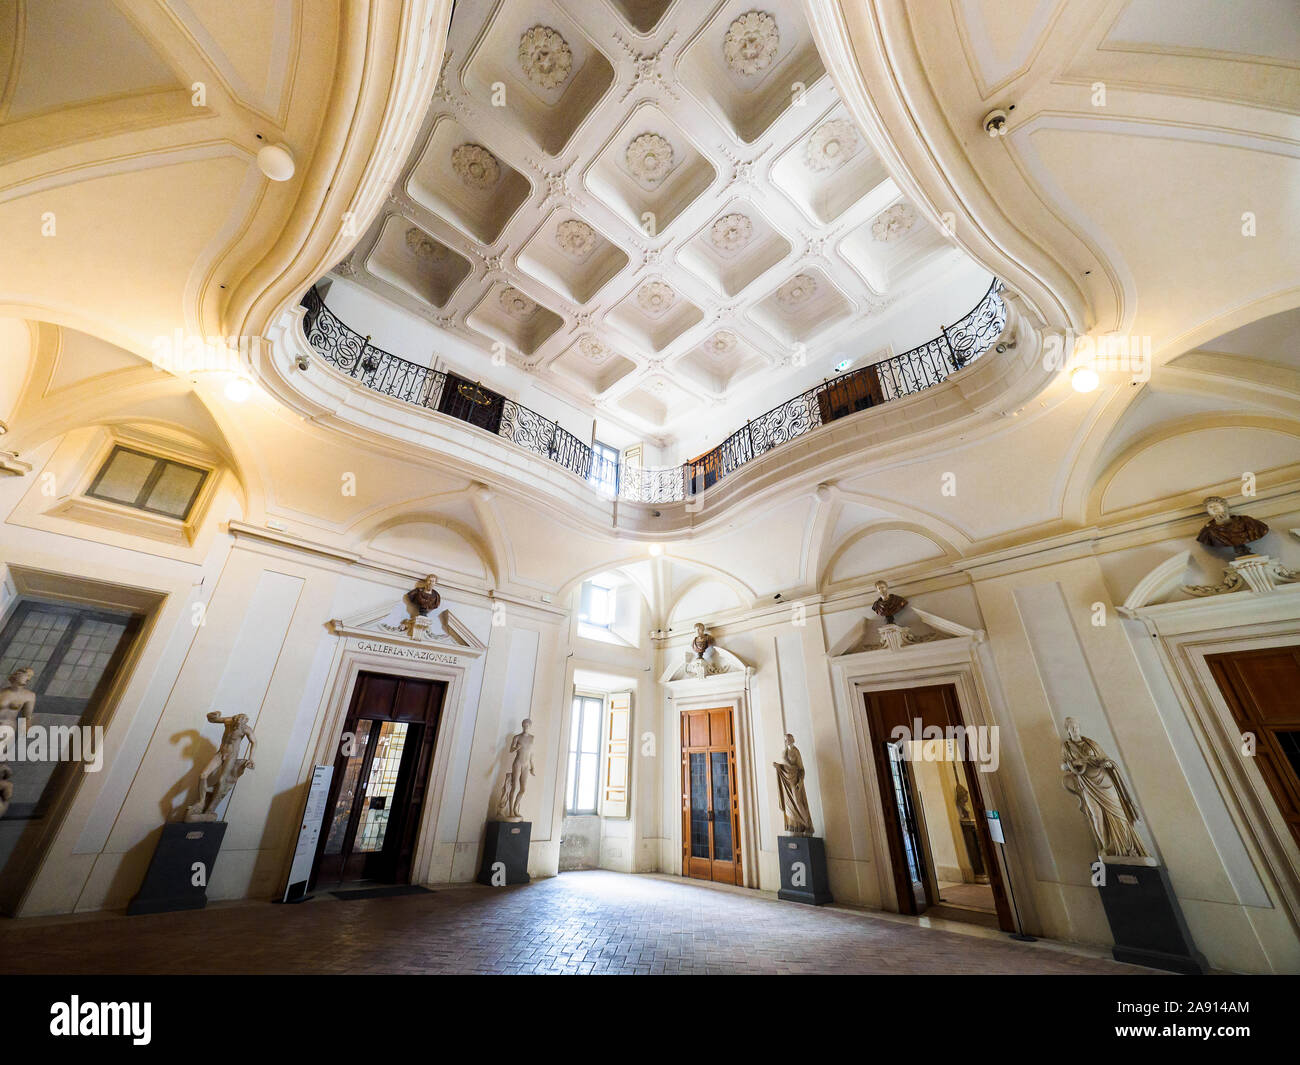 Ceiling of Palazzo Corsini - Rome, Italy Stock Photo - Alamy